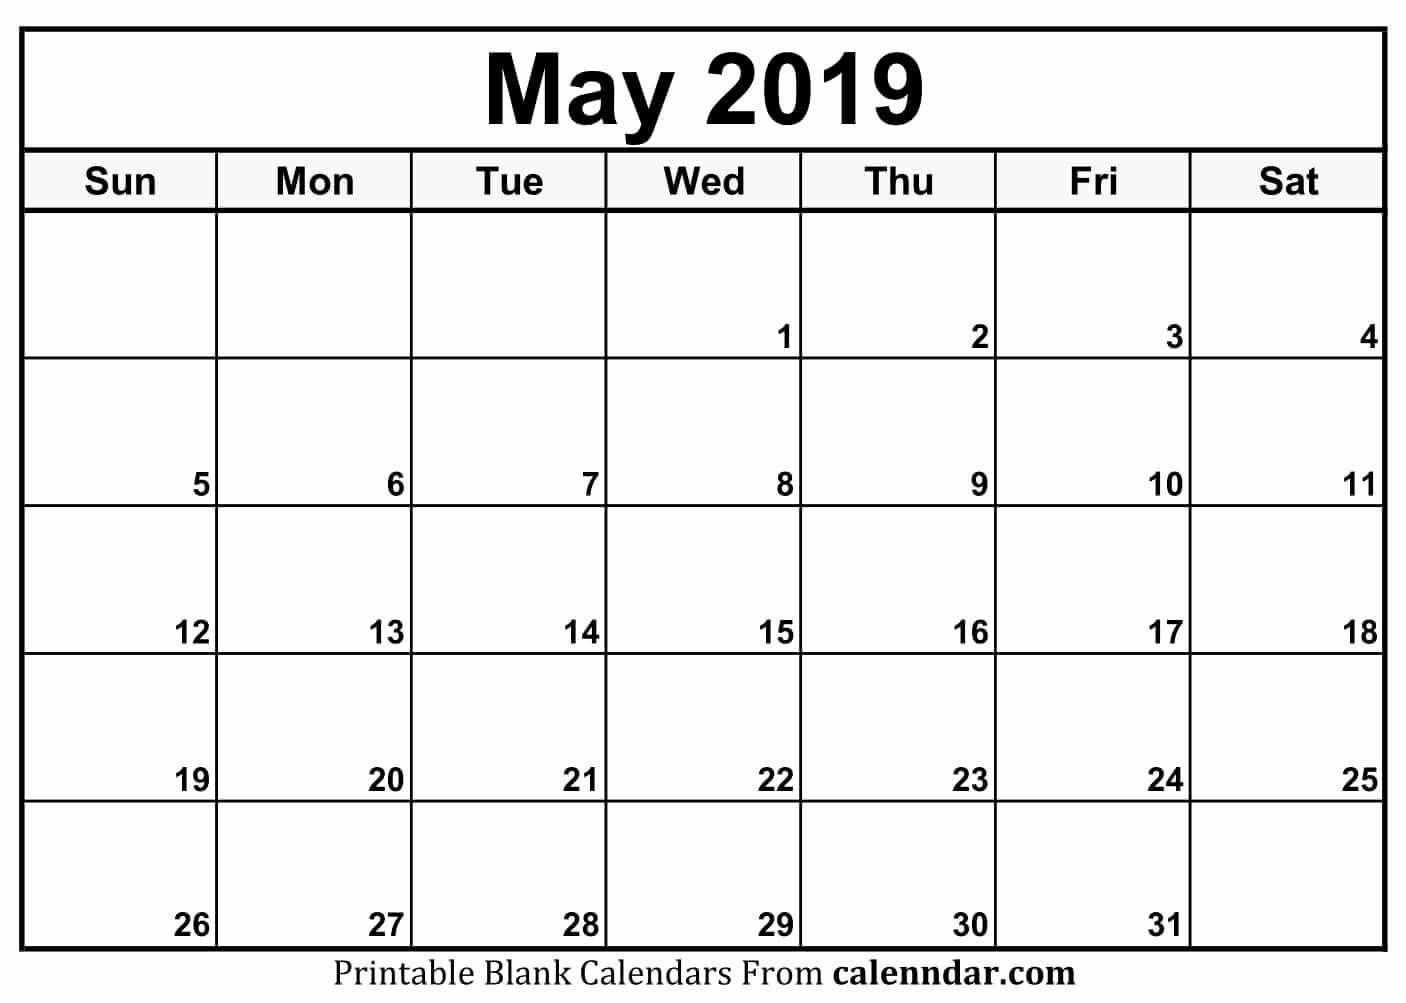 Awesome 31 Design Free May 2019 Calendar Printable